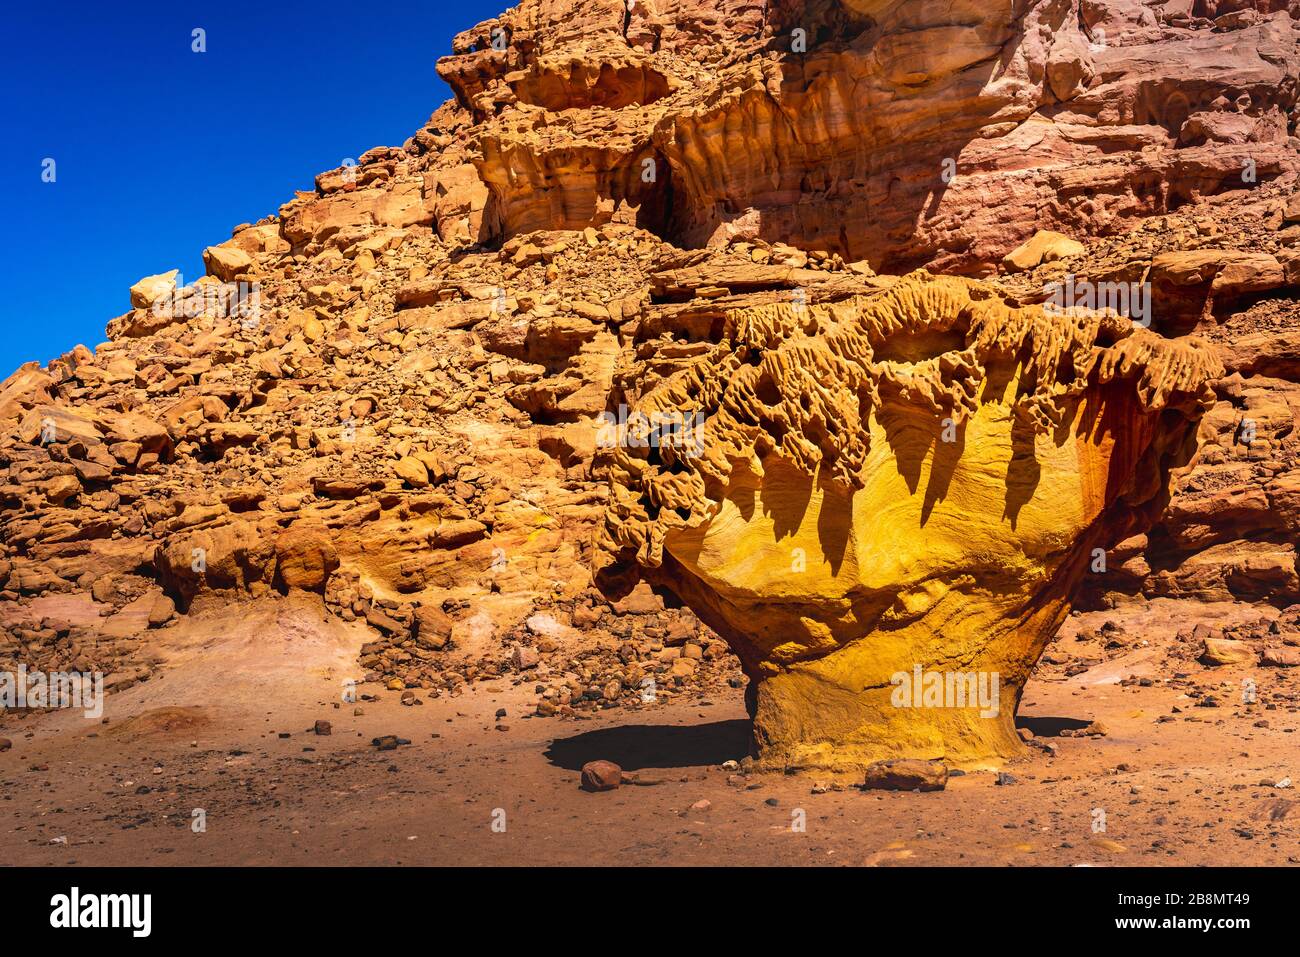 The mushroom rock in a  desert landscape in the sandstone region of the Sinai, Egypt, Stock Photo